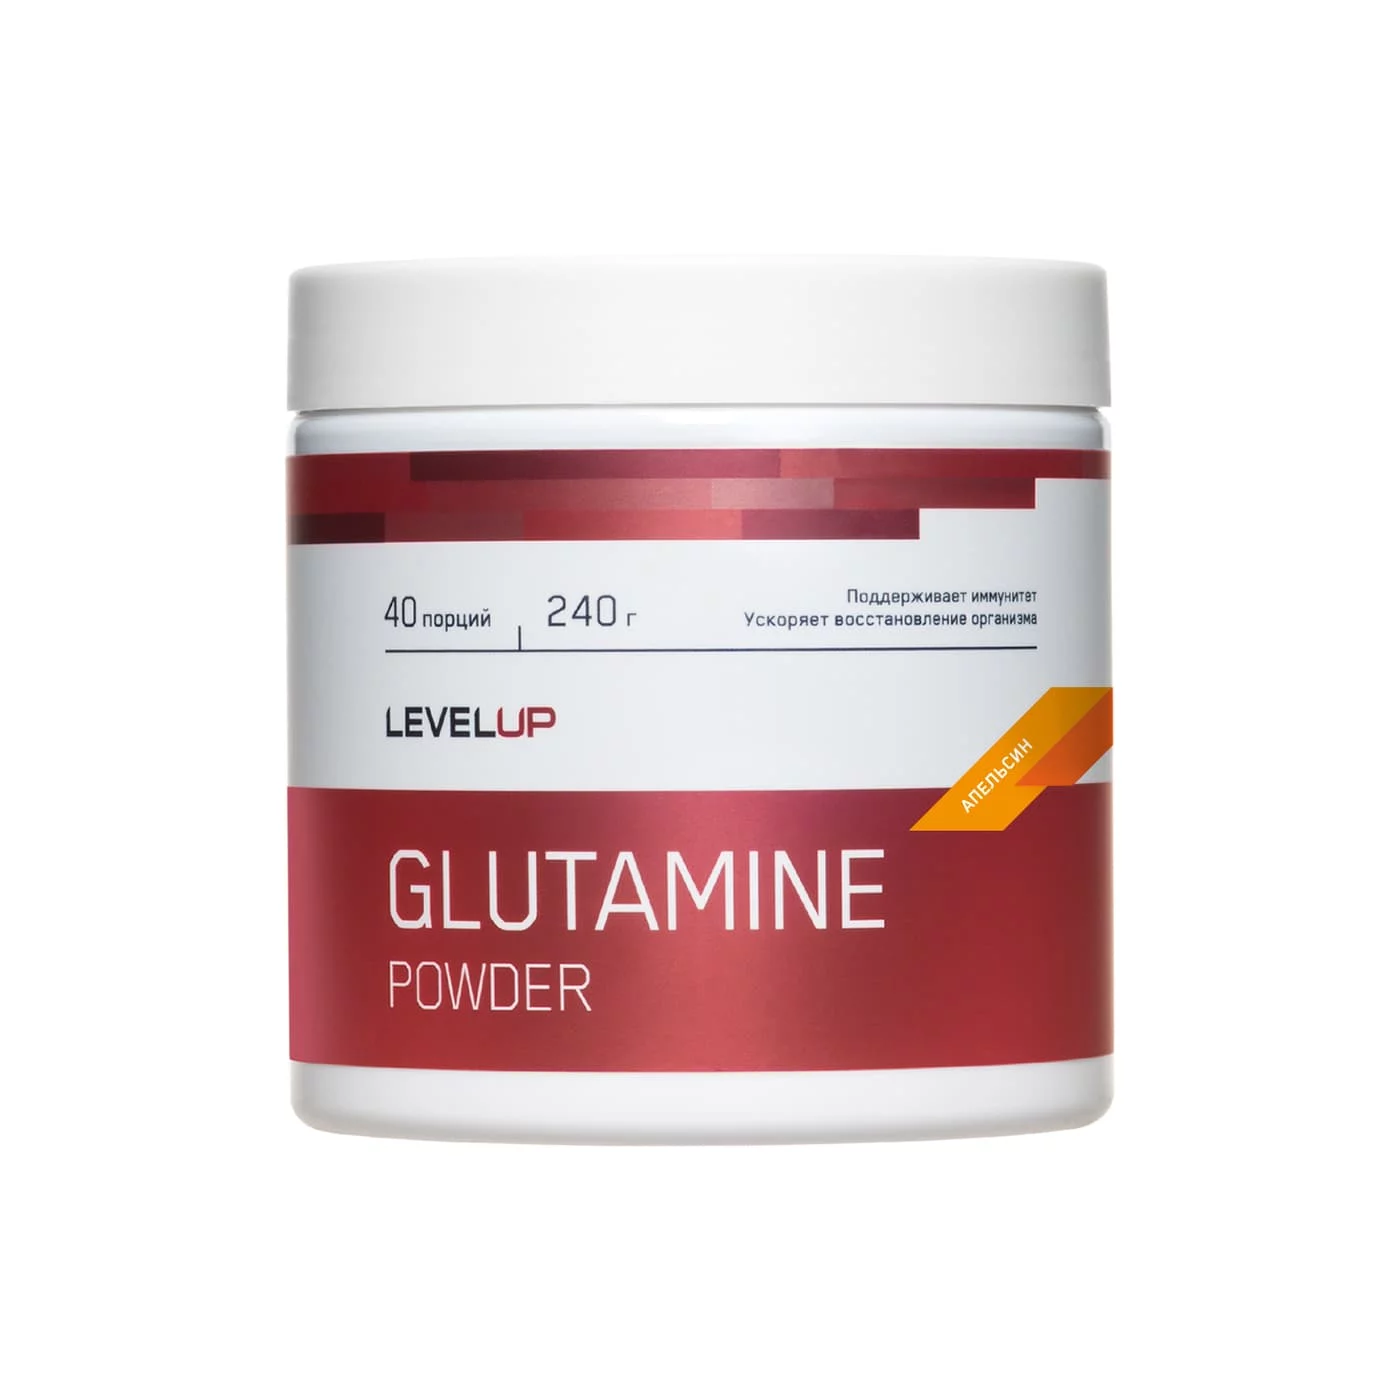 LevelUp Glutamine Powder 240g New фото